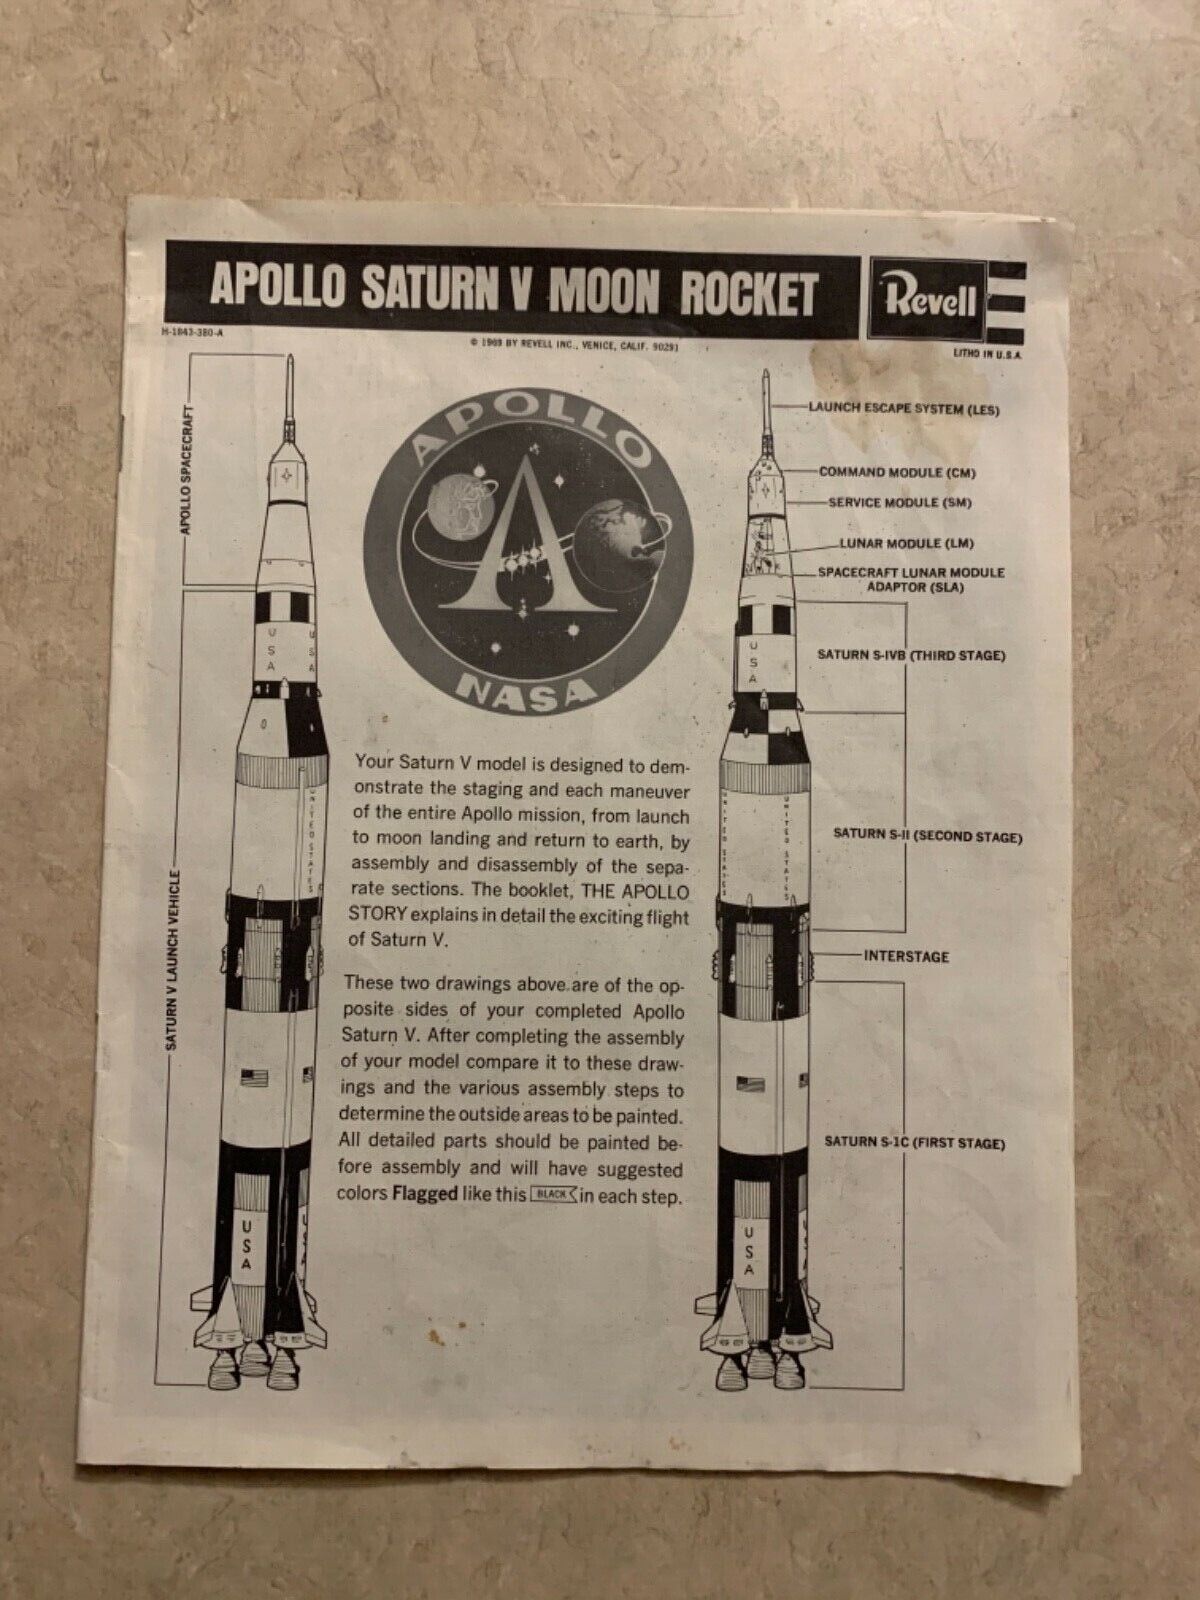 1969 Revell “Apollo Saturn V Moon Rocket” Assembly Instructions